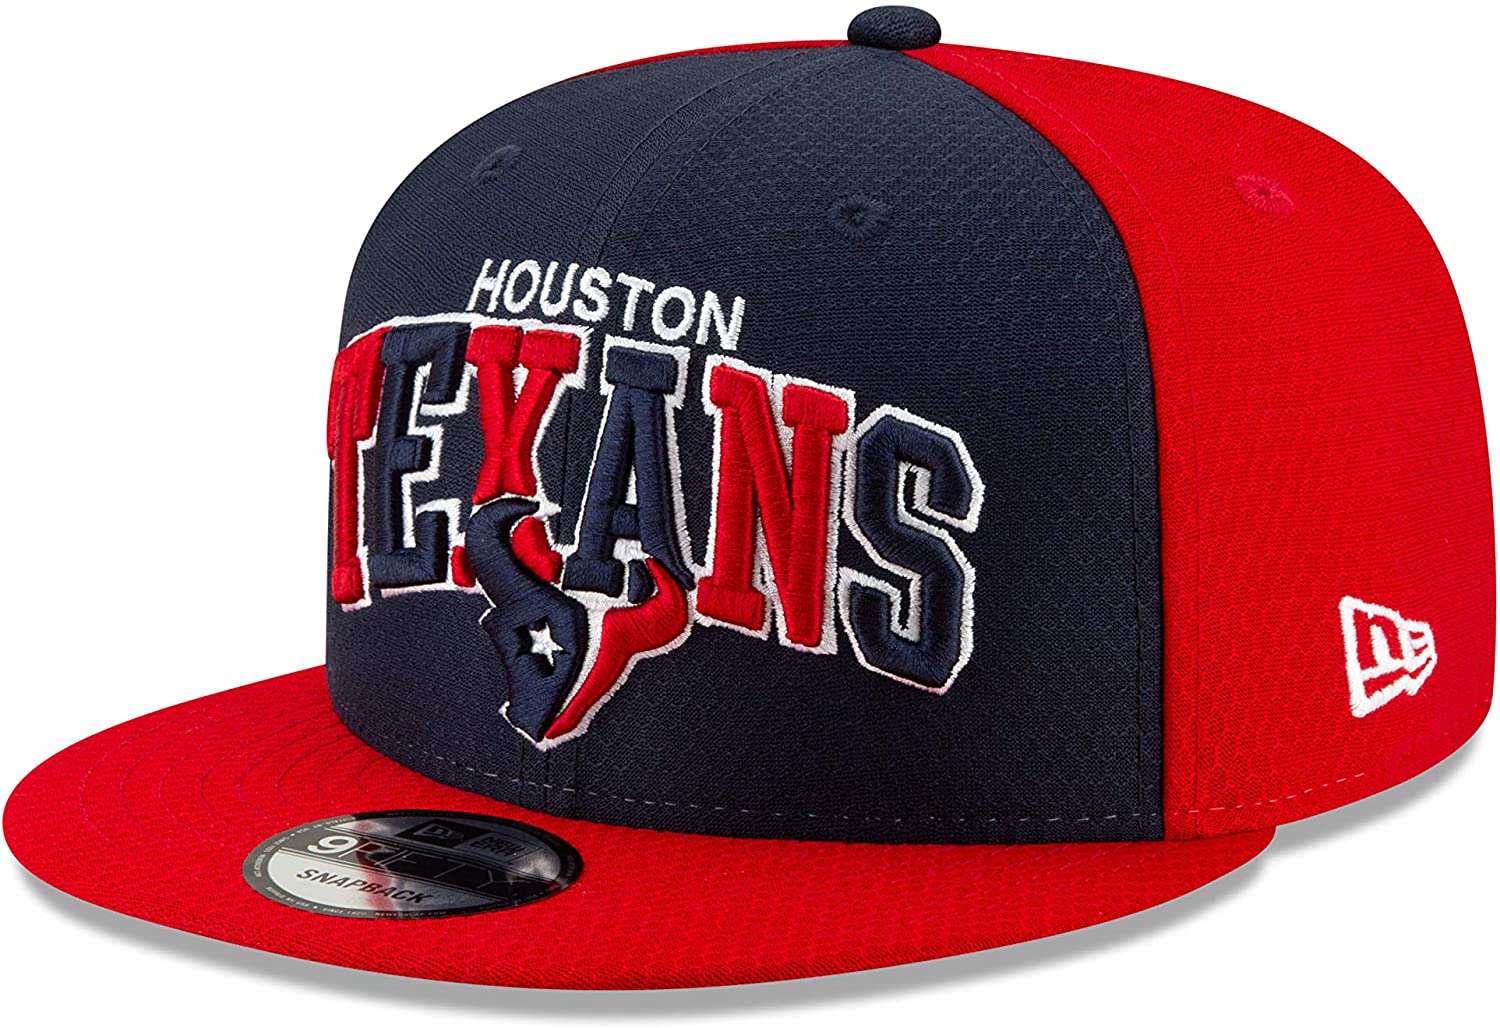 New Era Houston Texans 2019 NFL On-Field 9FIFTY Cap Home 1990 12050197